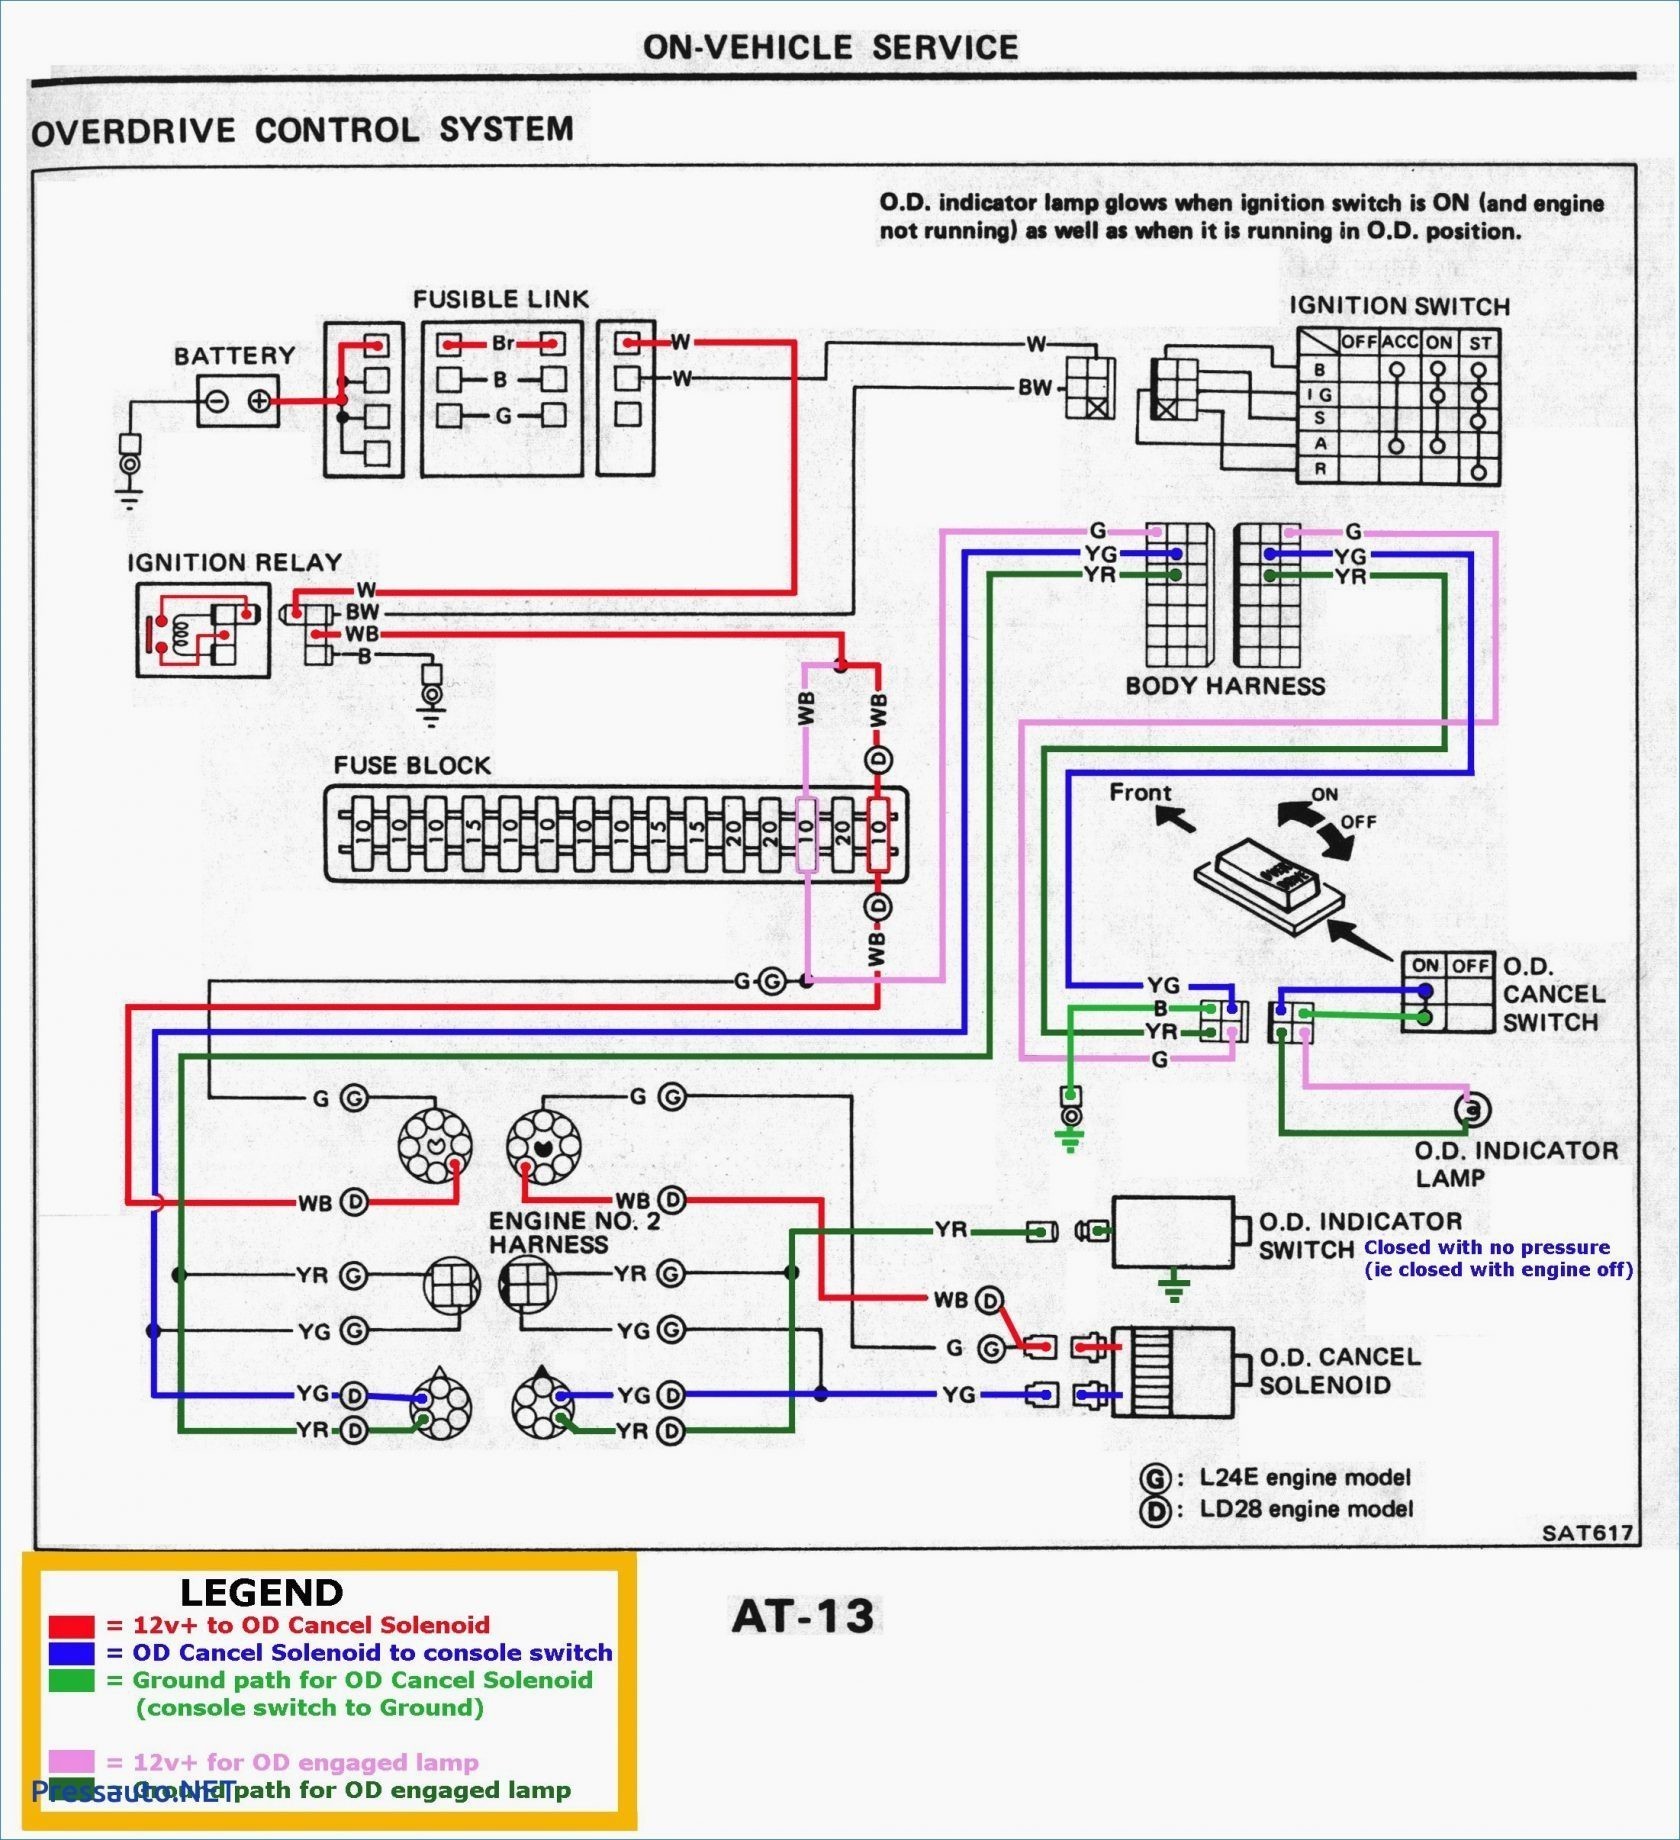 John Deere Gator Ignition Diagram Dune Buggy Engine Schematics Of John Deere Gator Ignition Diagram